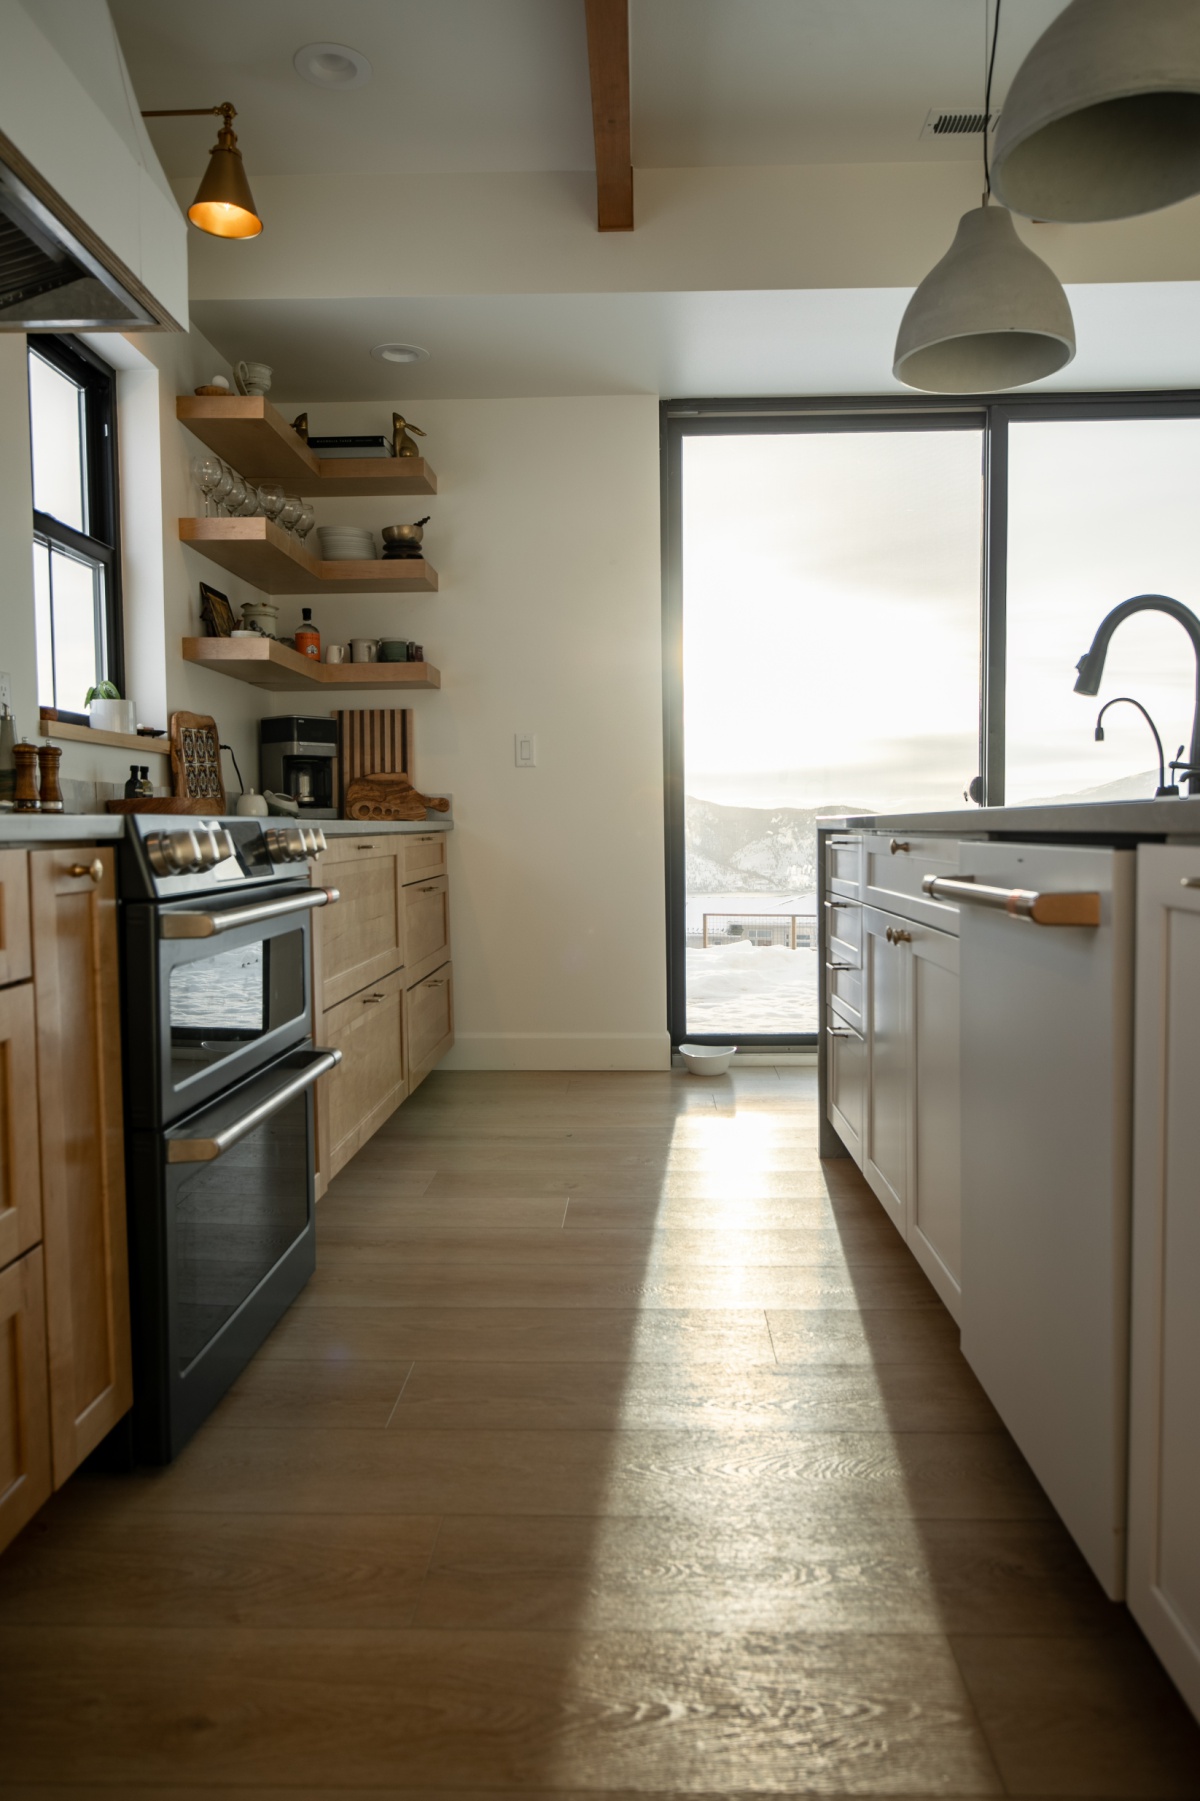 kitchen view with cafe appliances, concrete pendants, and big sliding door.